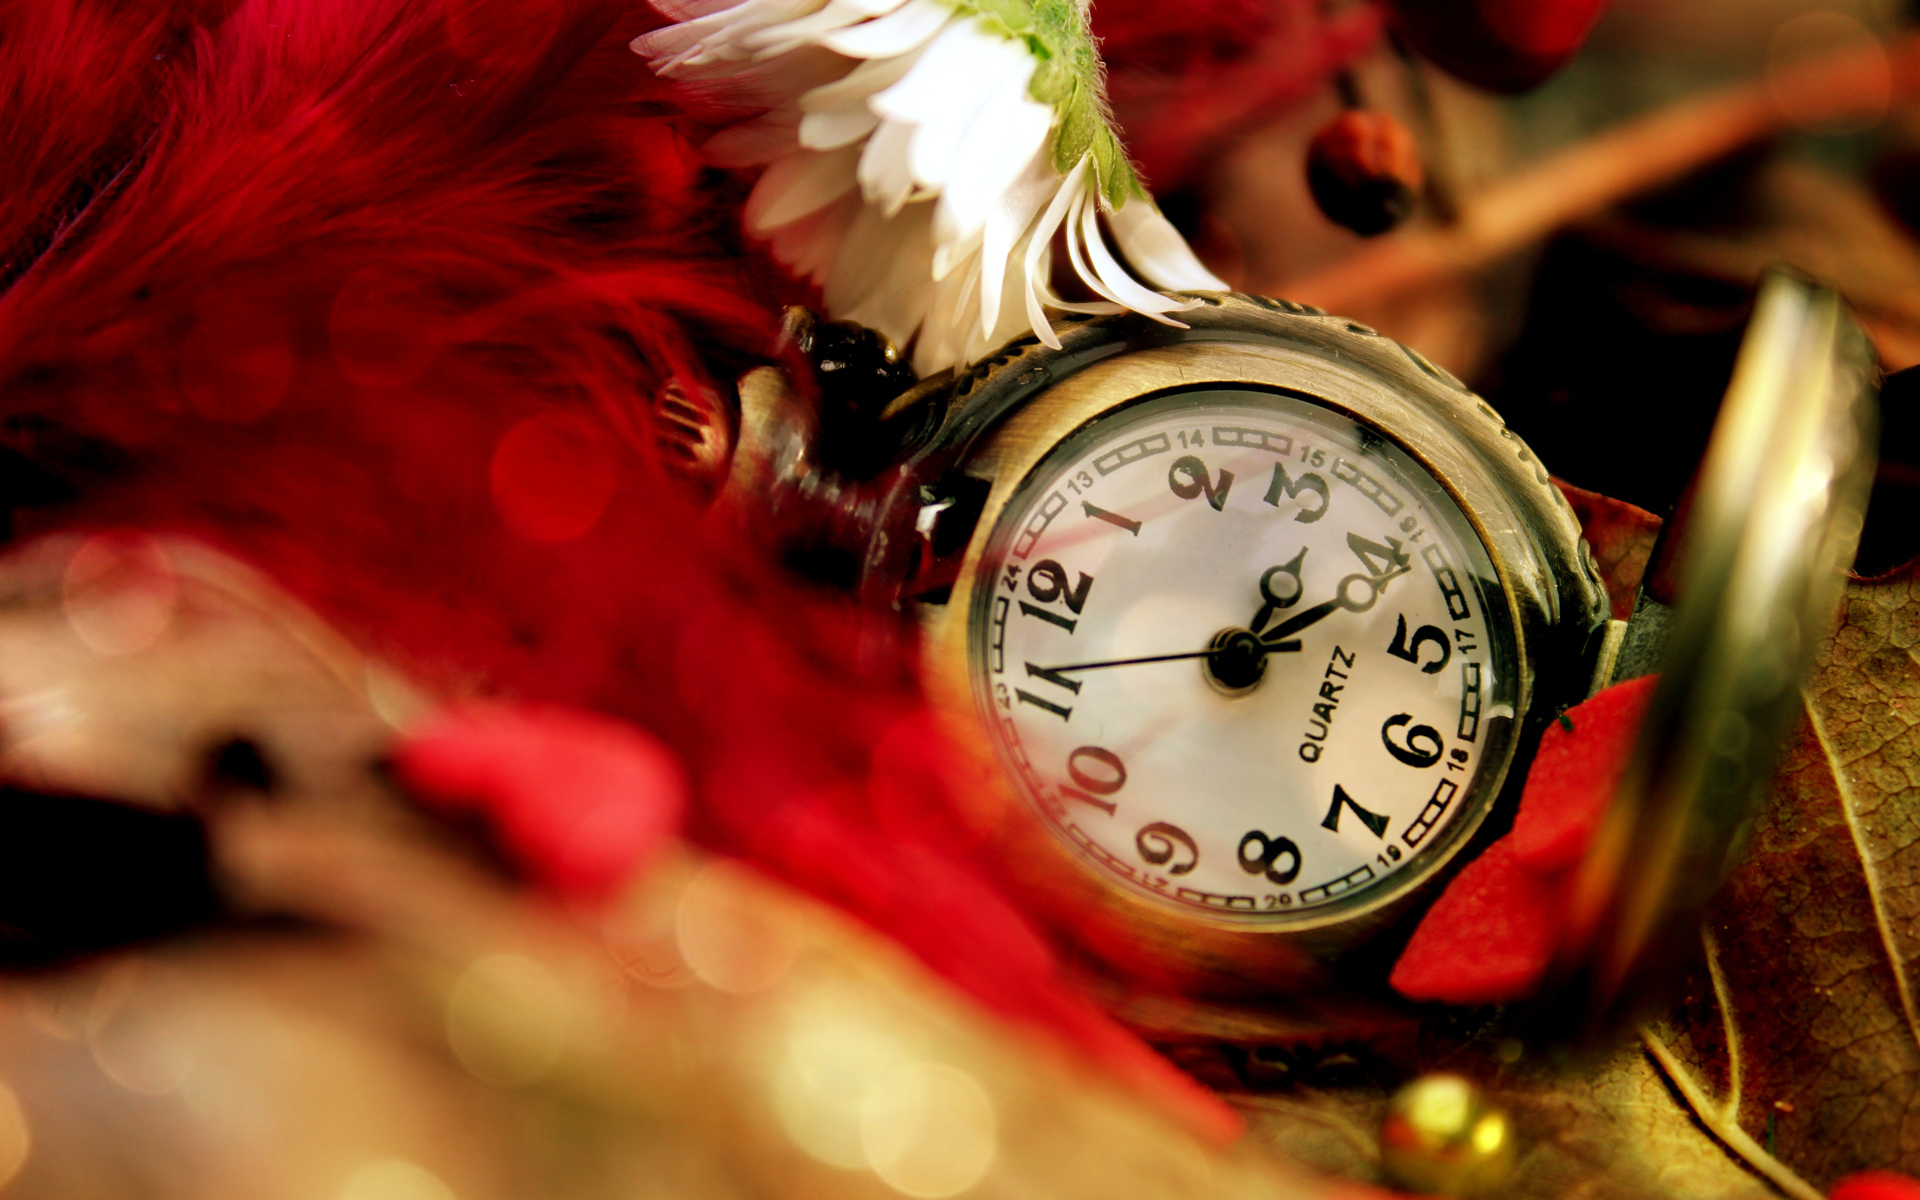 waches clocks wallpaper,watch,red,pocket watch,close up,still life photography